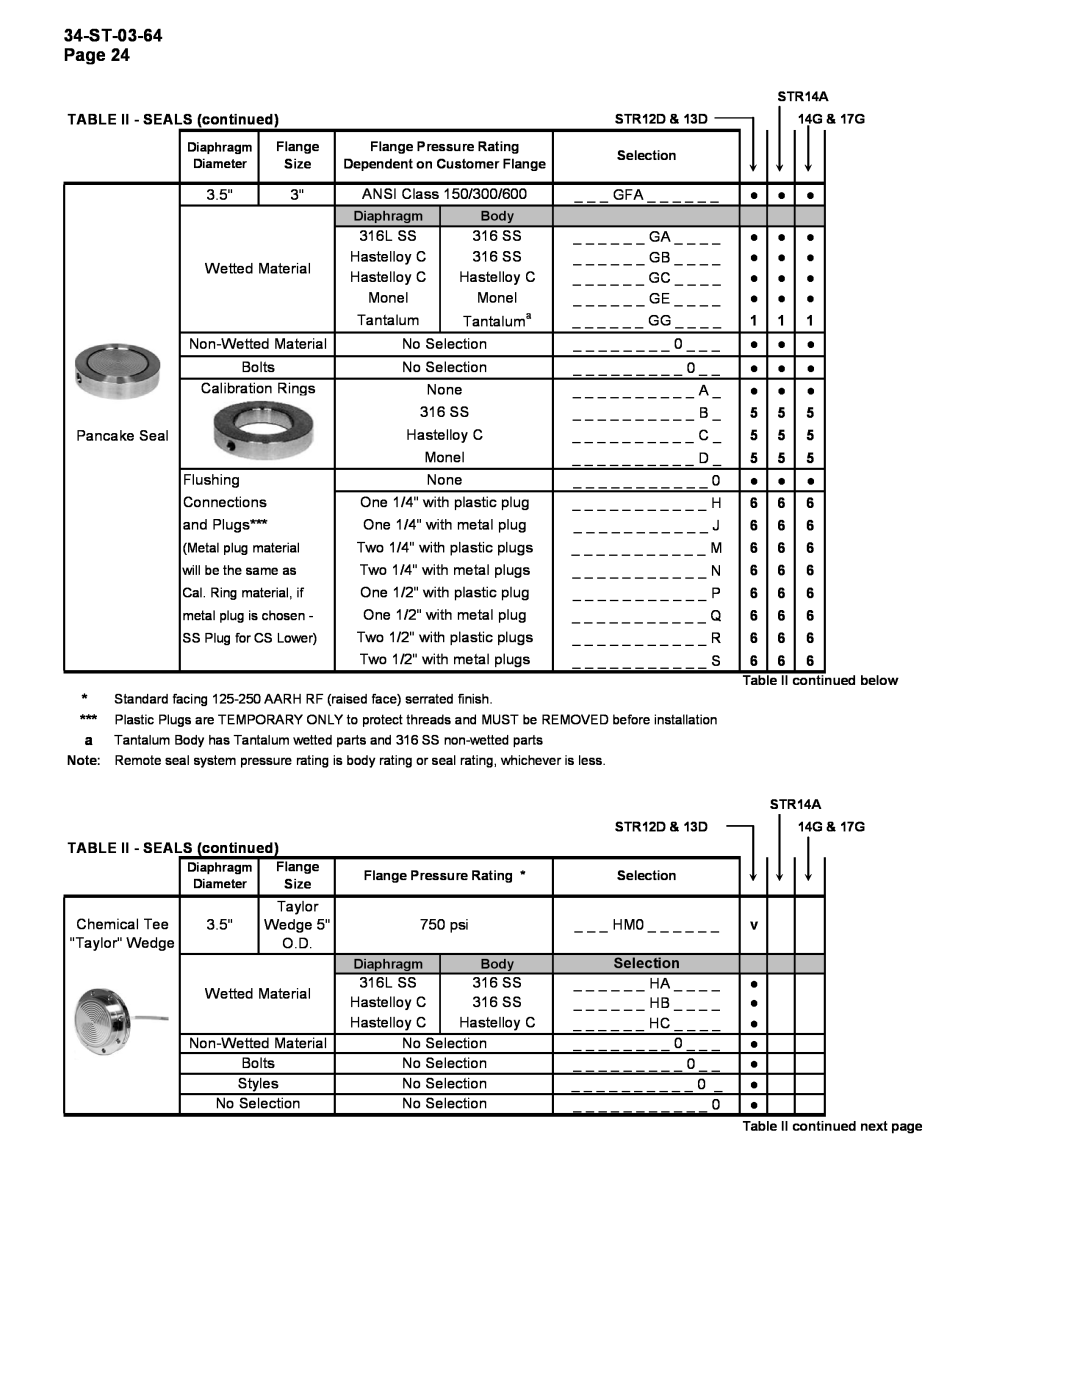 Honeywell STR12D warranty TABLE II - SEALS continued 